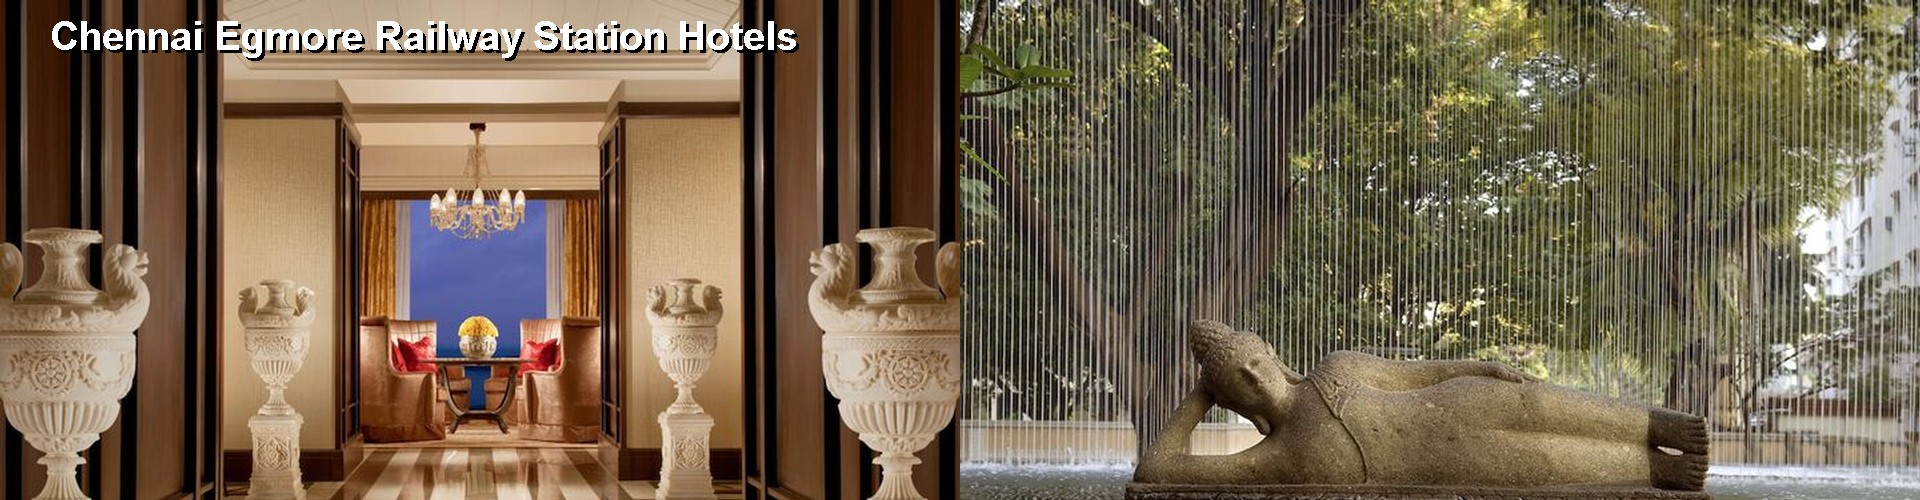 5 Best Hotels near Chennai Egmore Railway Station